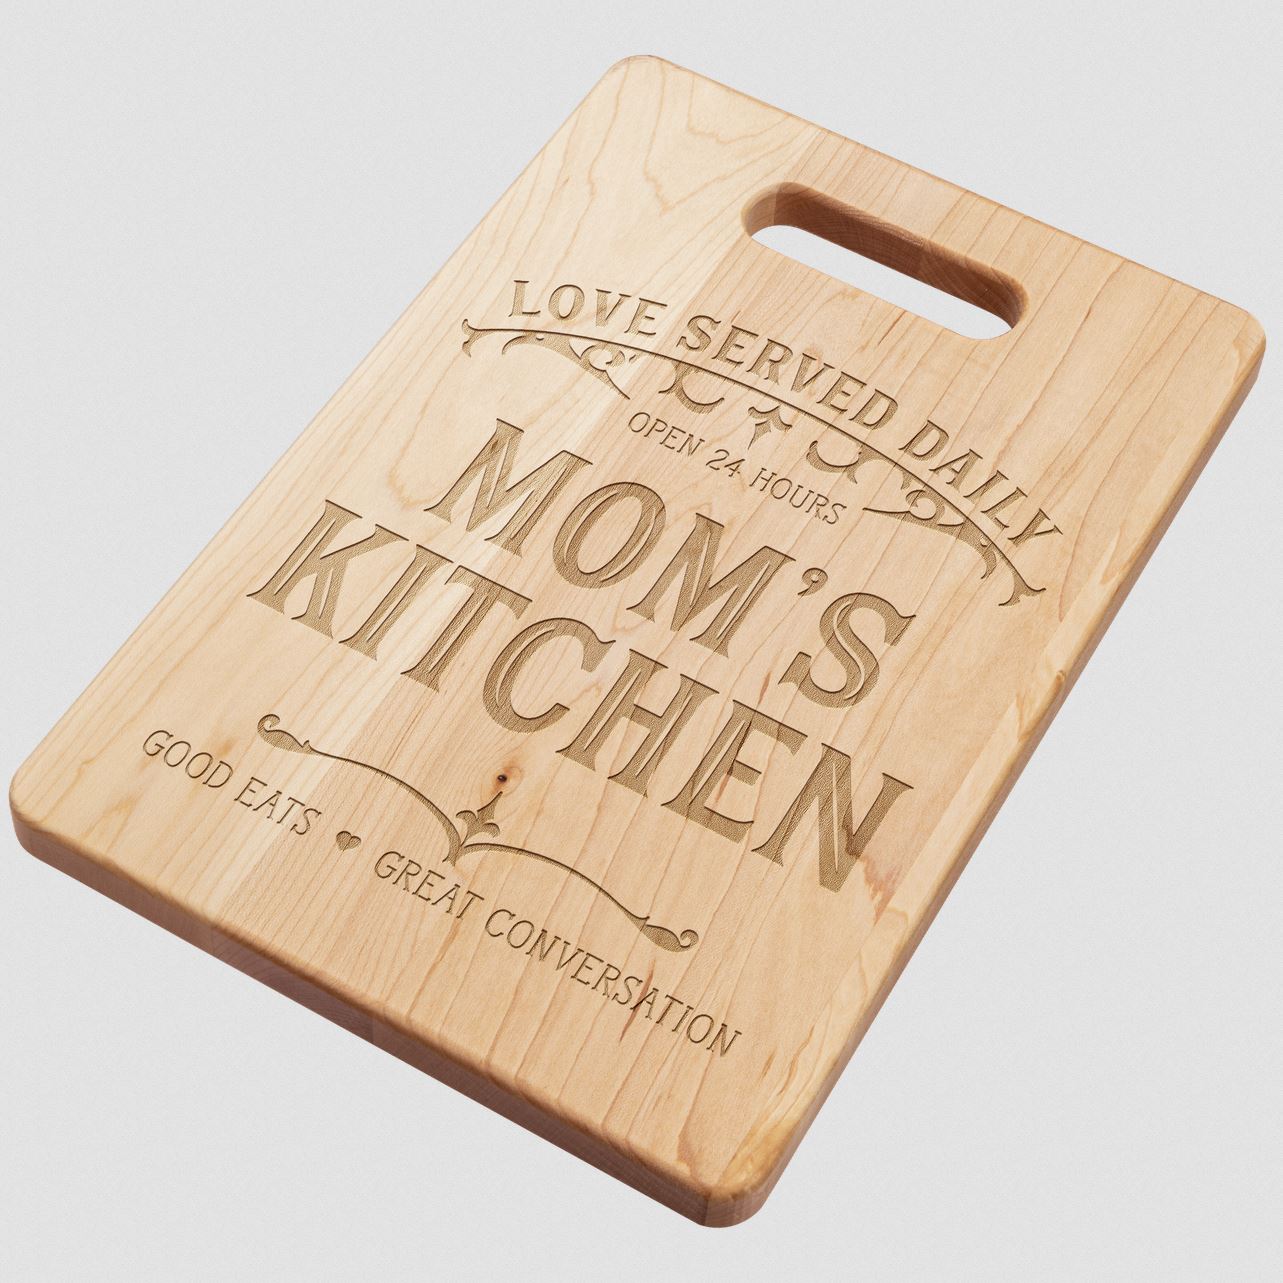 Mom's Kitchen • Oganic Bamboo Cutting Board – Salmon Olive